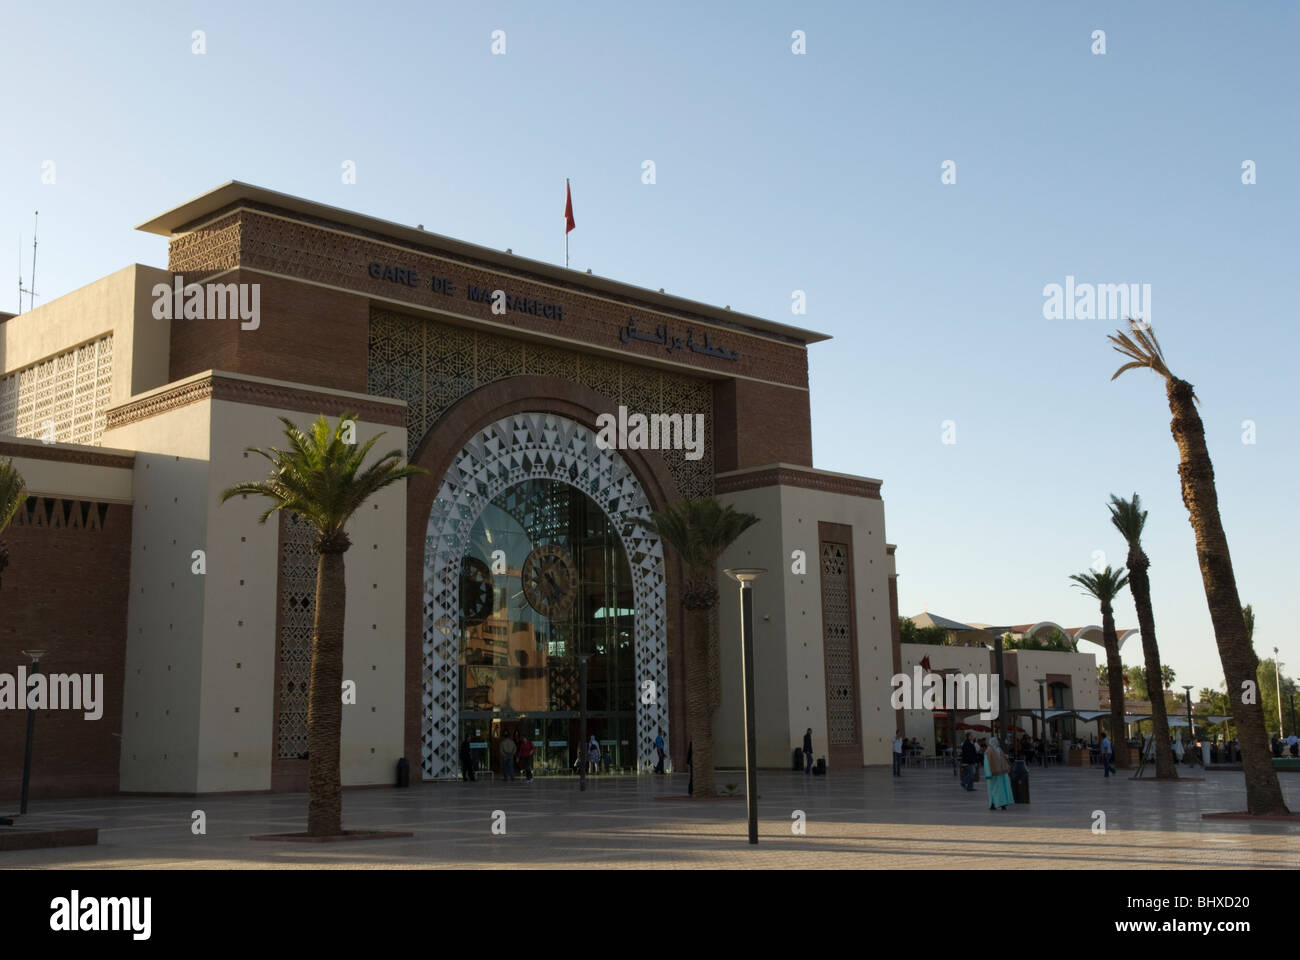 La gare de Marrakech, Marrakech, Maroc. Banque D'Images